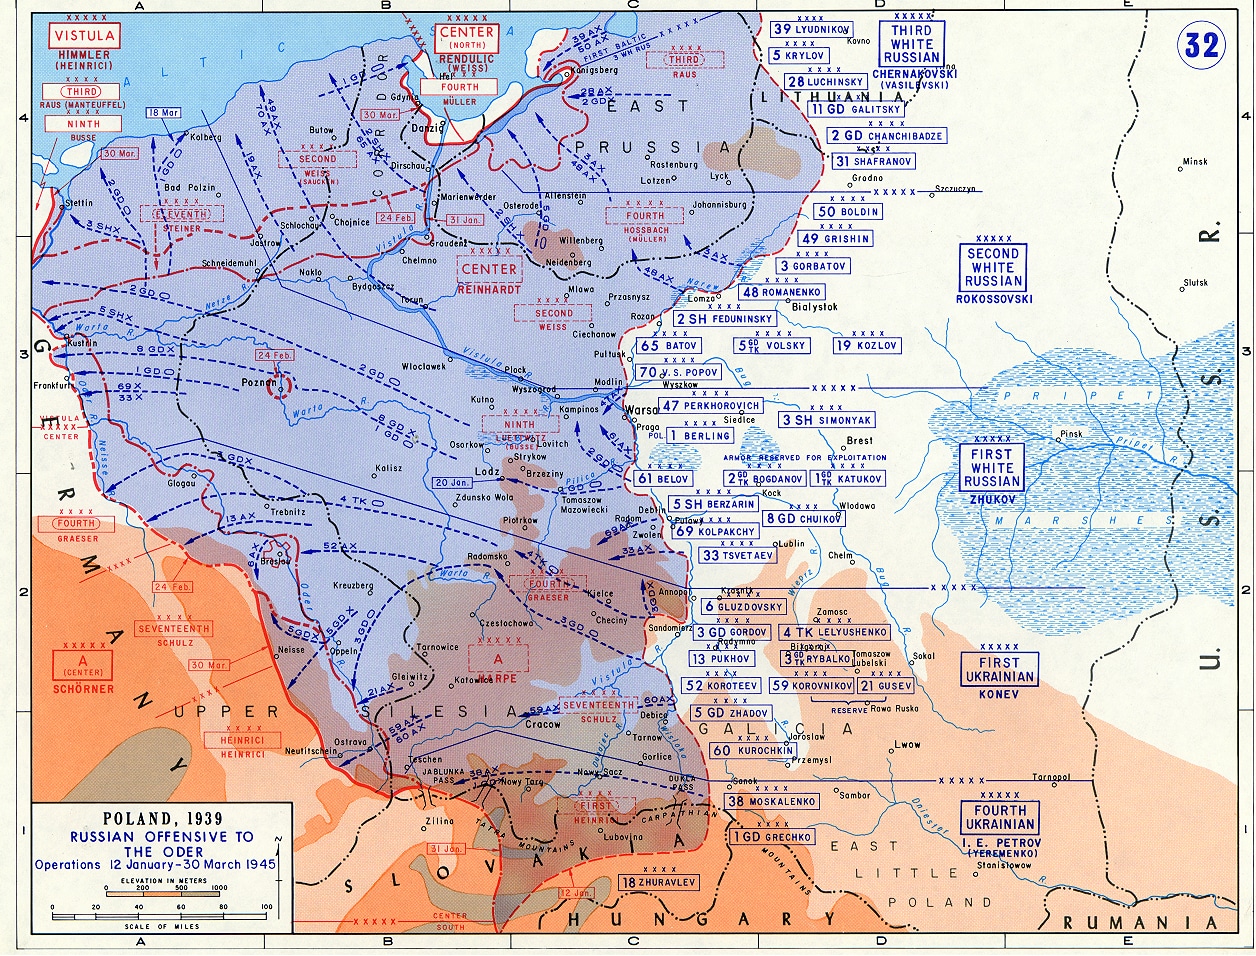 The Vistula-Oder Campaign